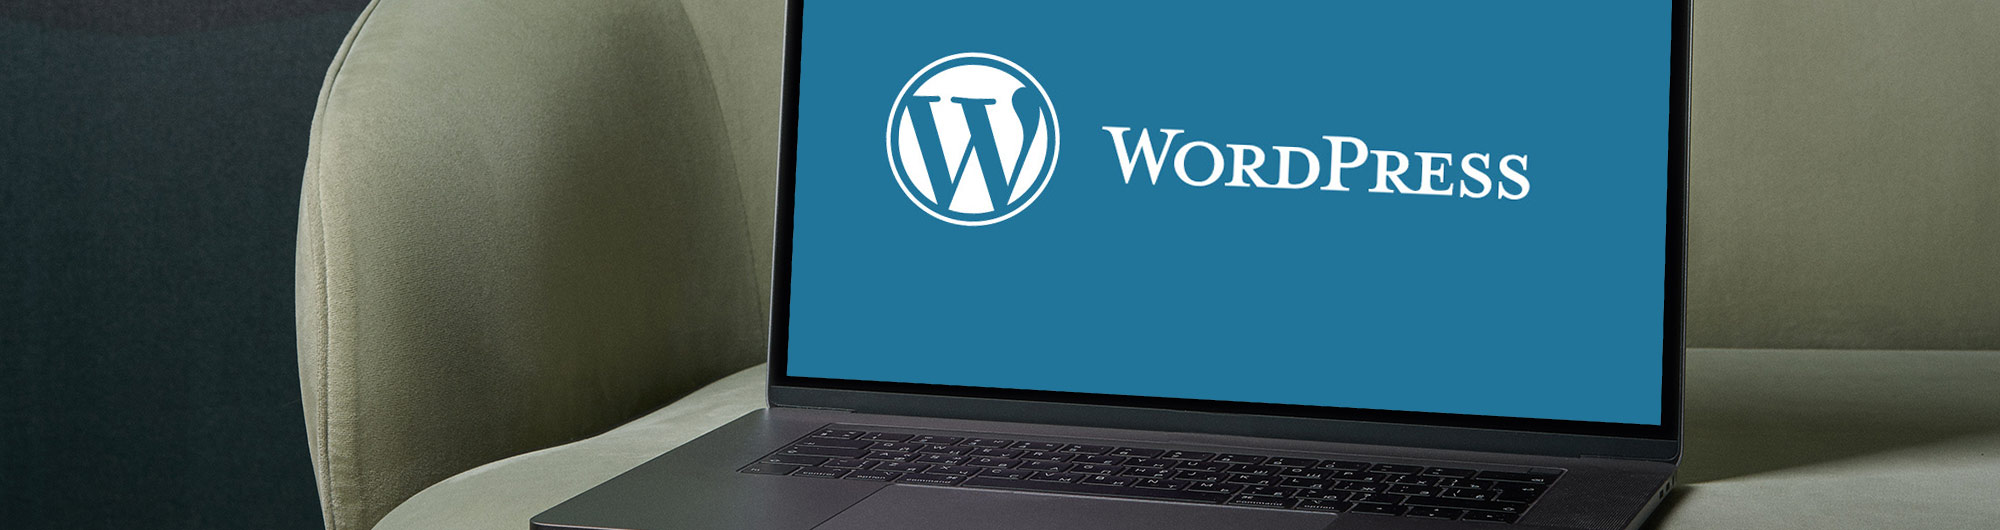 Wordpress powered websites from PF Web Designs